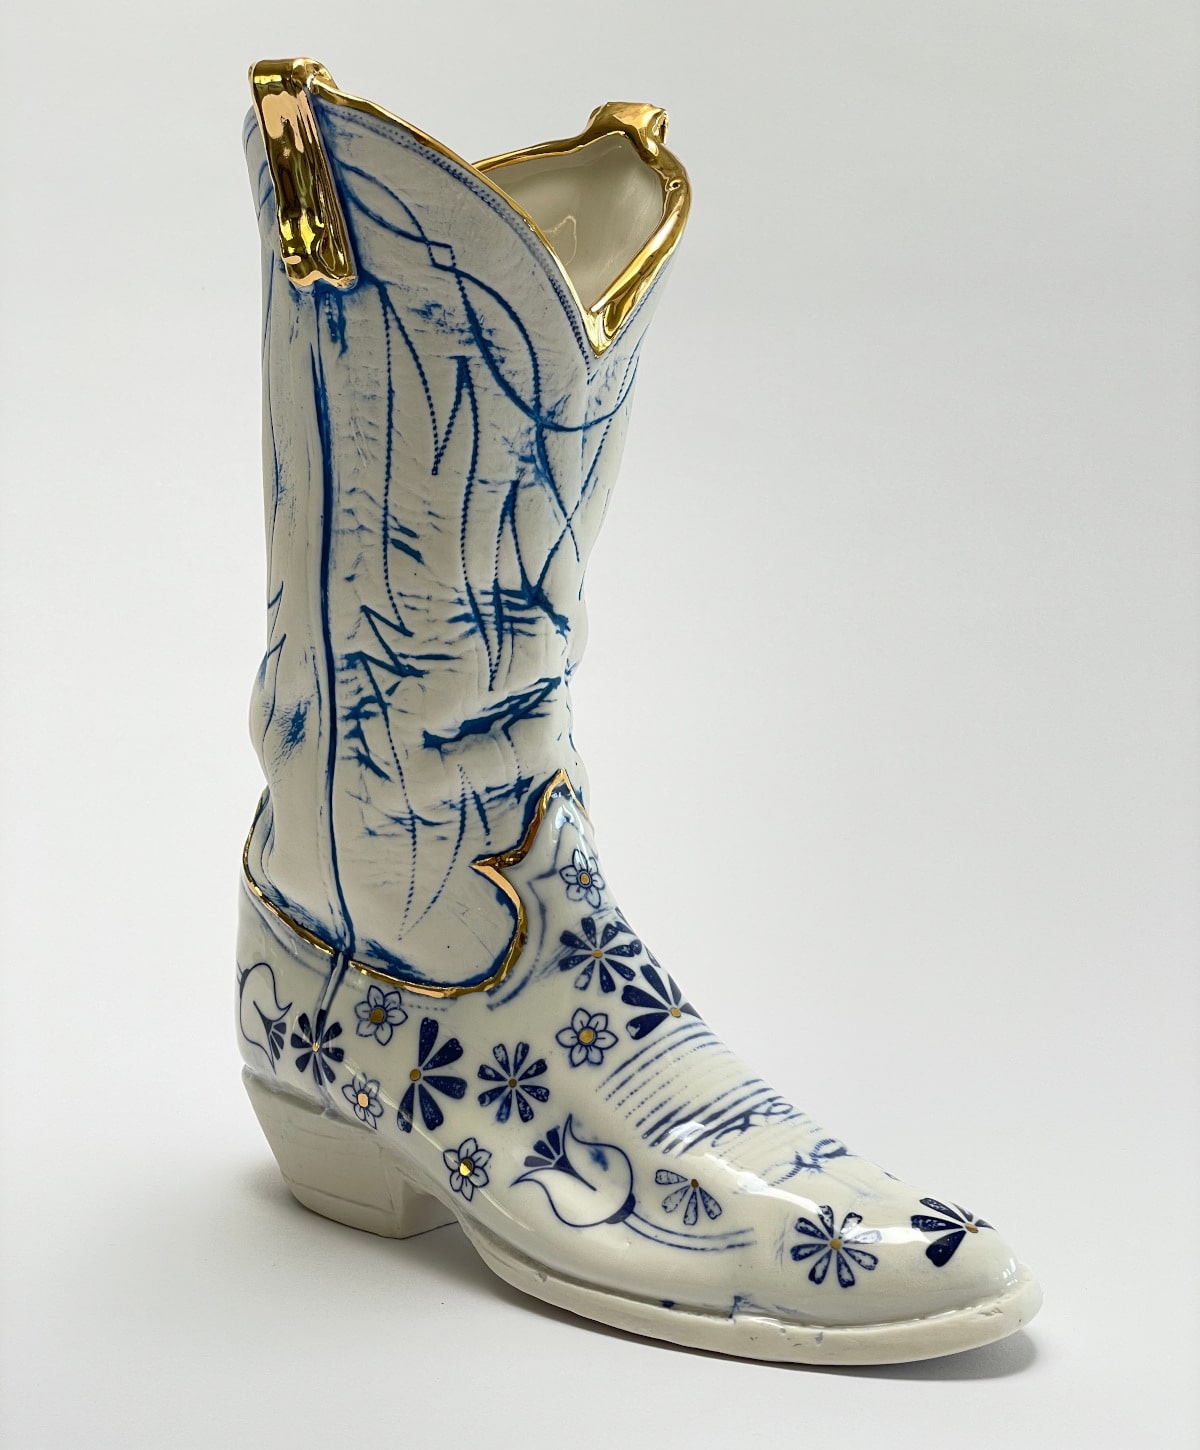 cowboy boots made of porcelain by Brock DeBoer